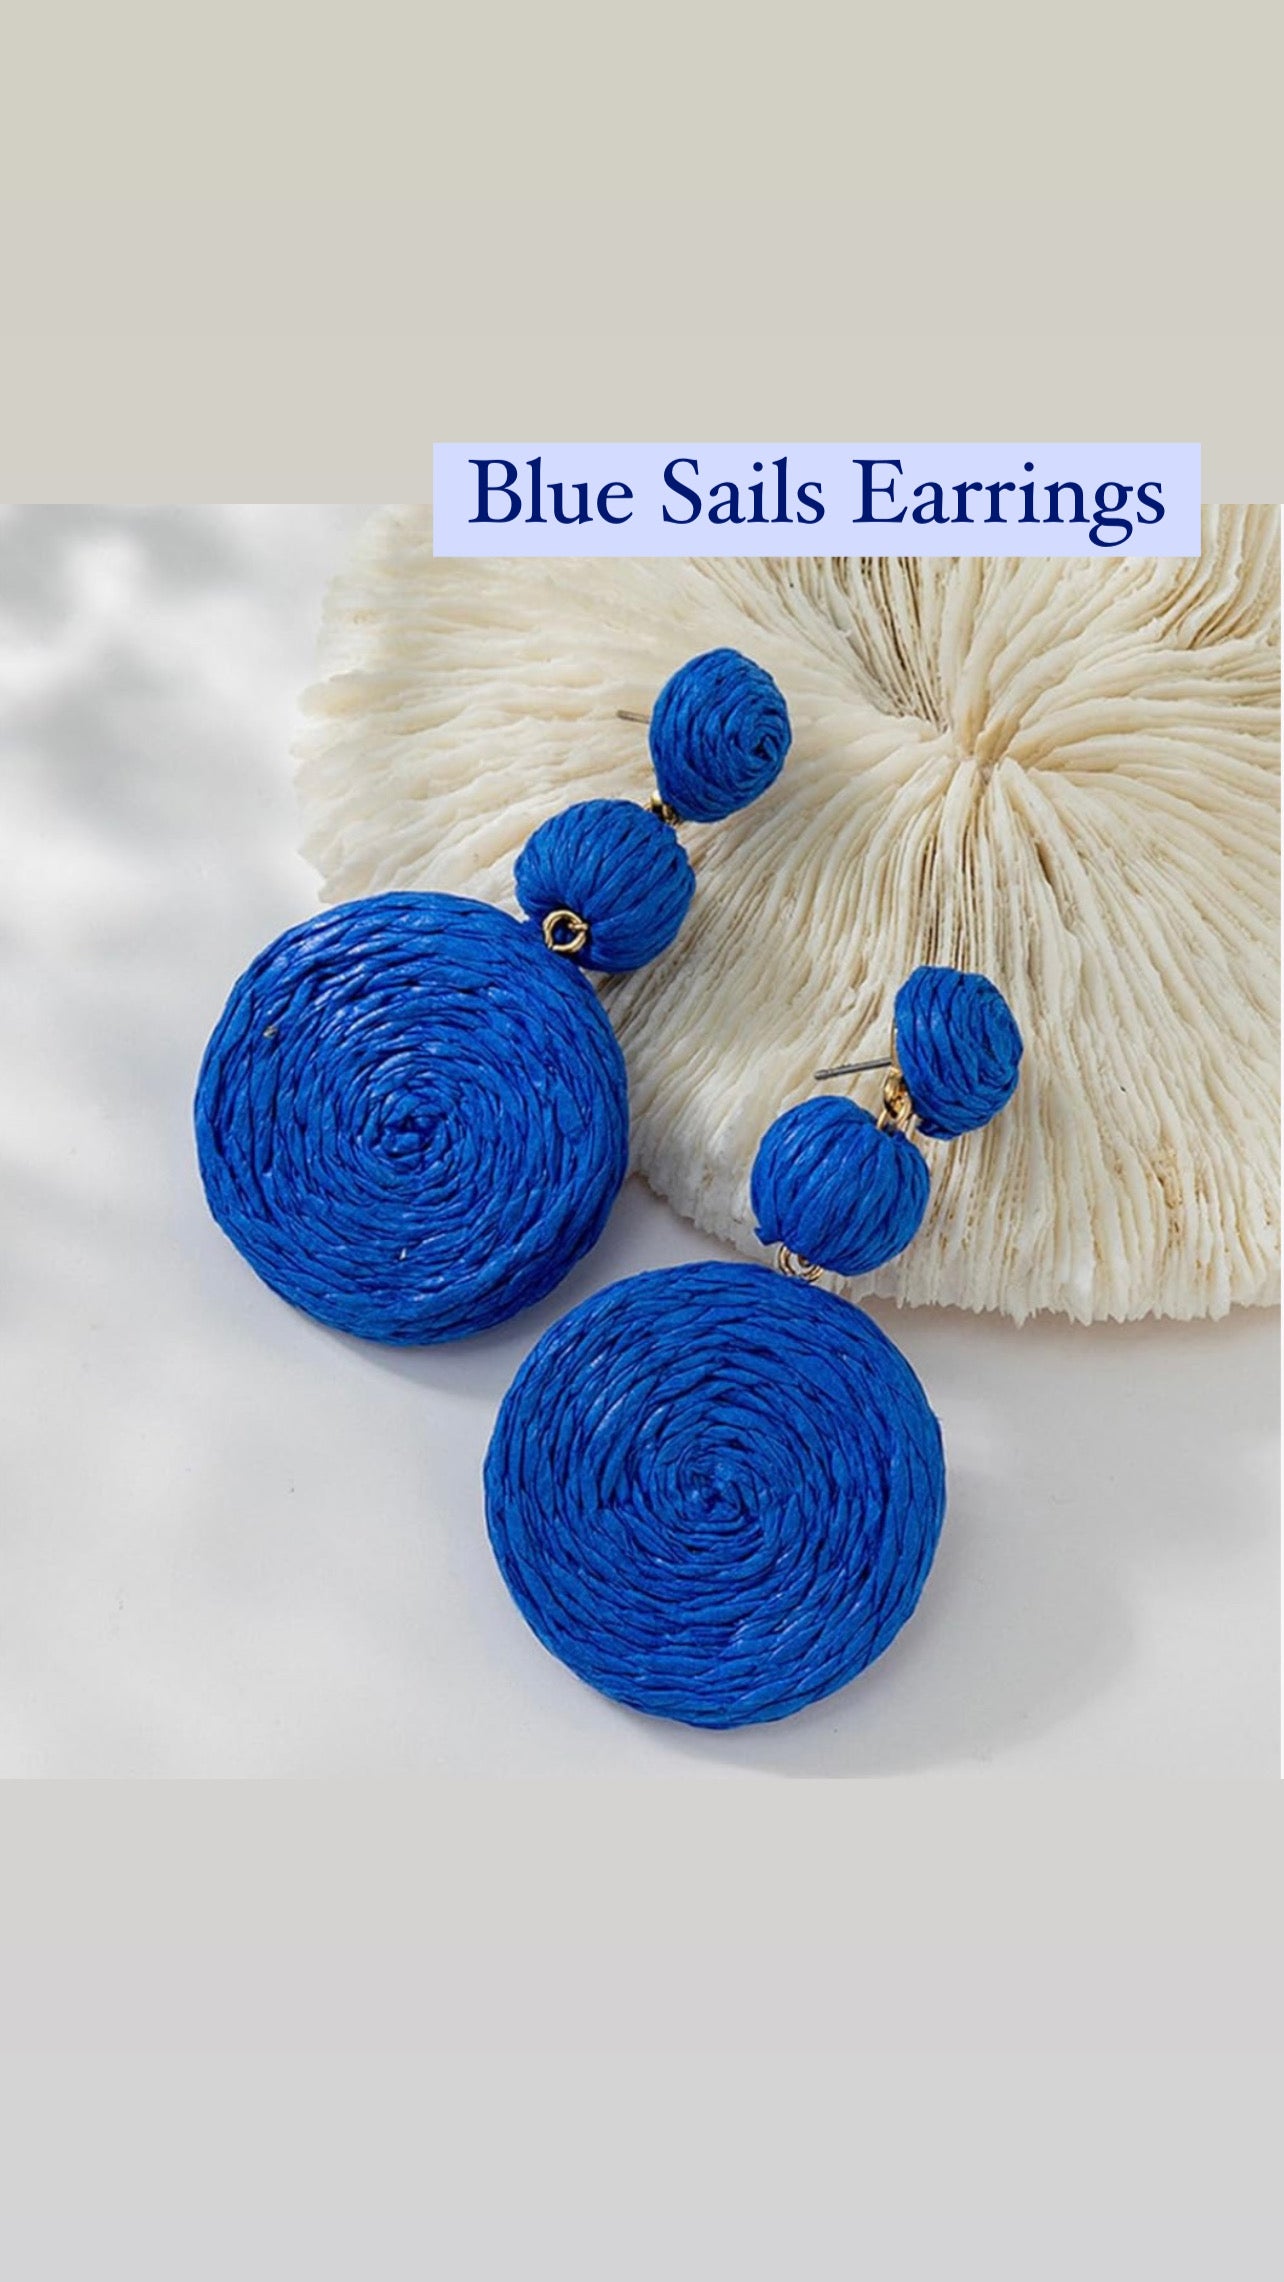 Blue Sails Earrings